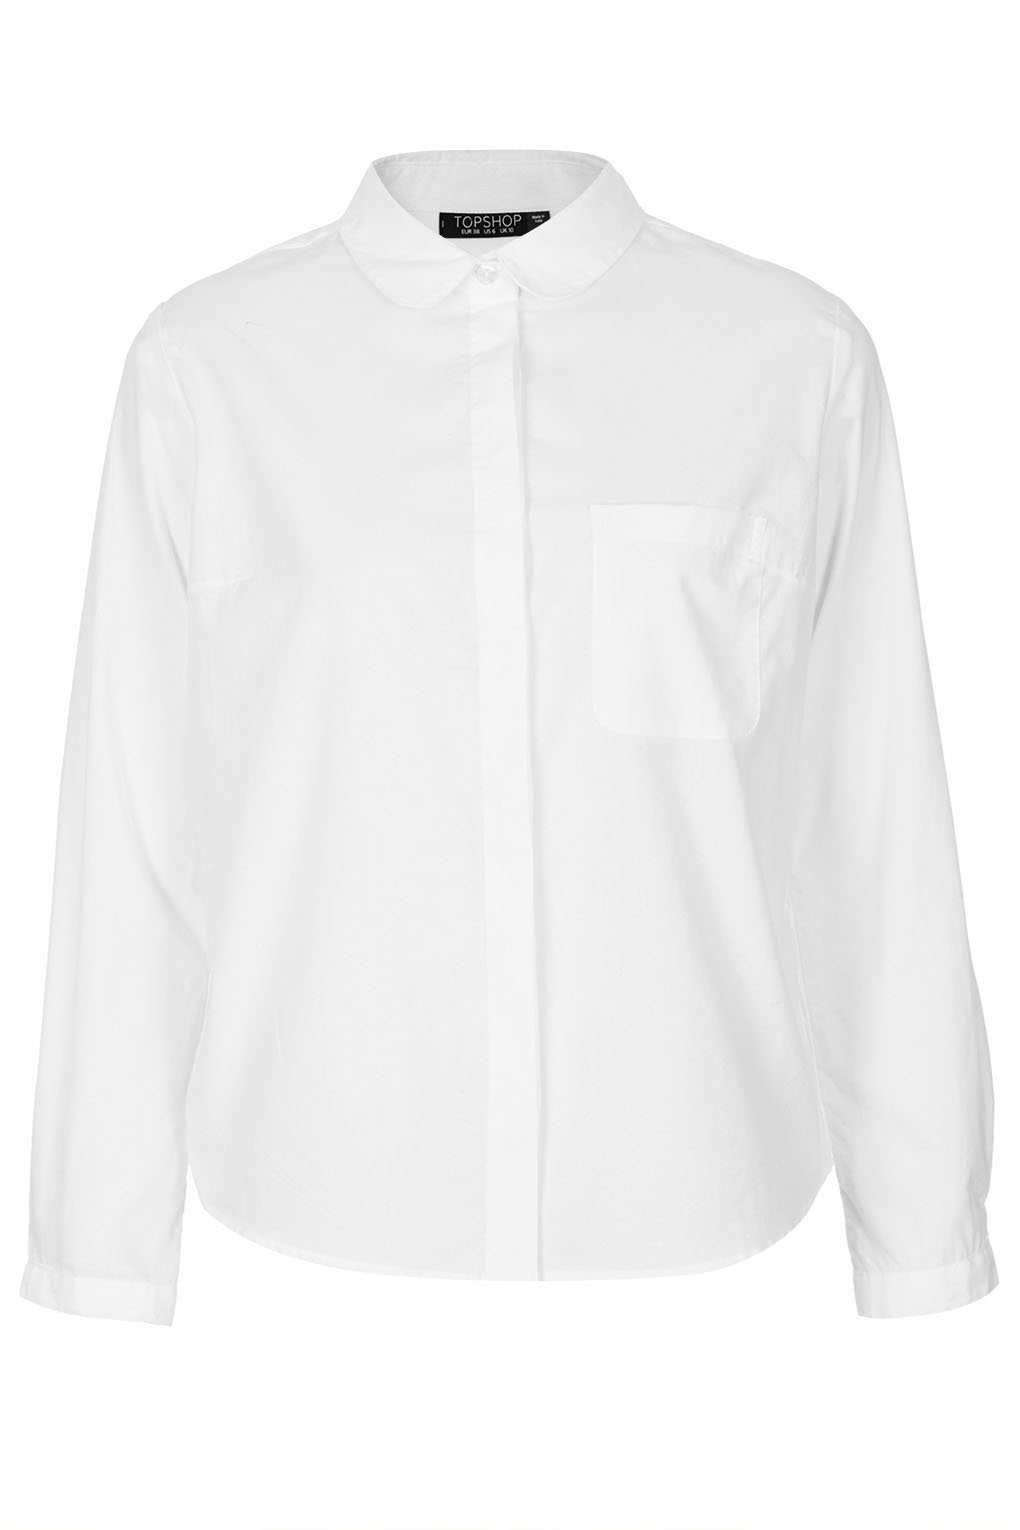 Lyst - Topshop Longsleeve White Shirt in White